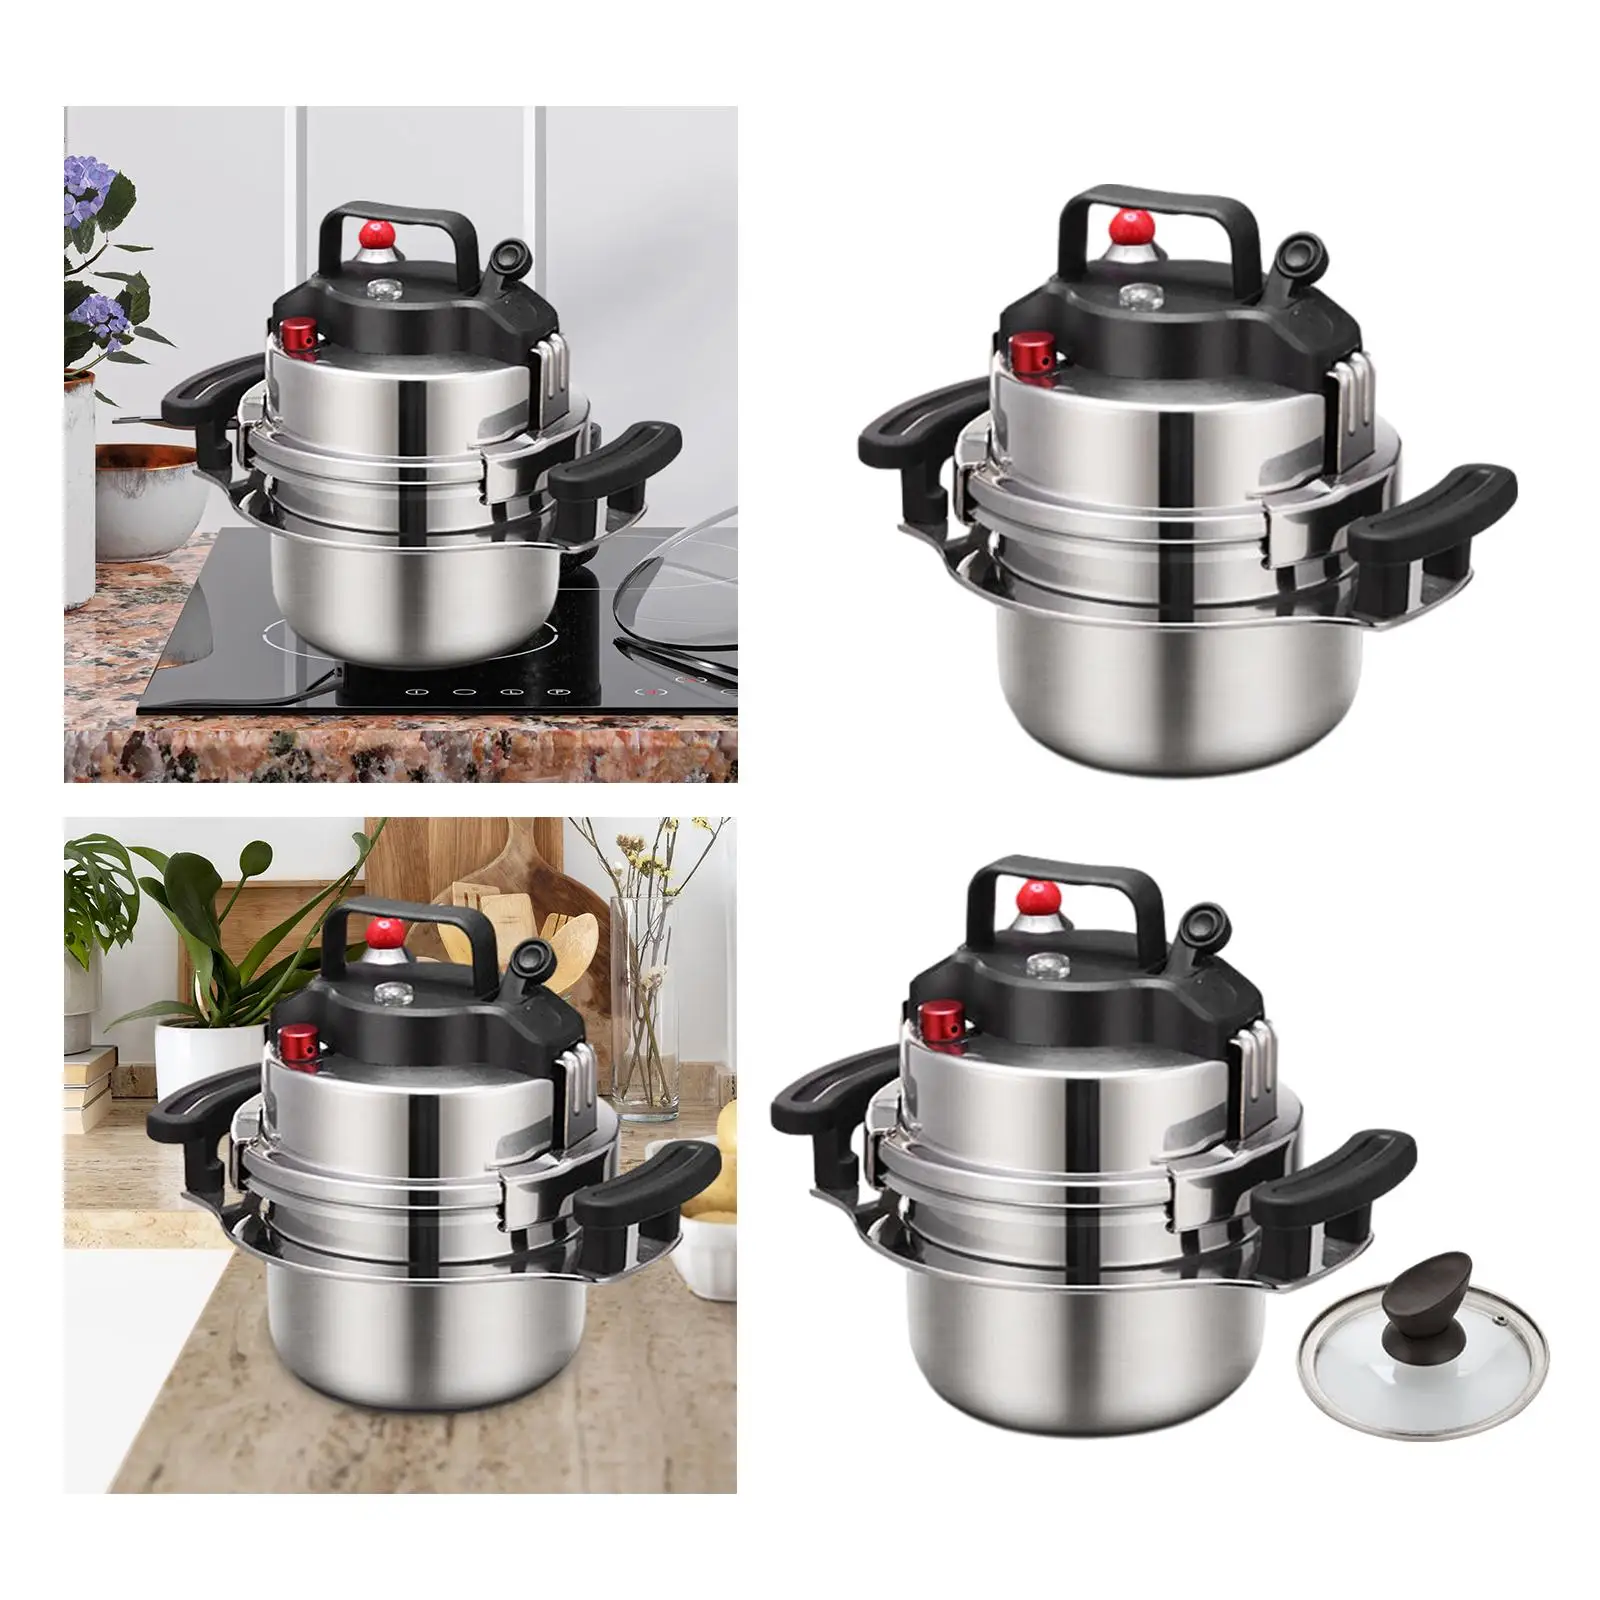 2 Quart Pressure Cooker Mini Pot Slow Cooker for Home Commercial Outdoor